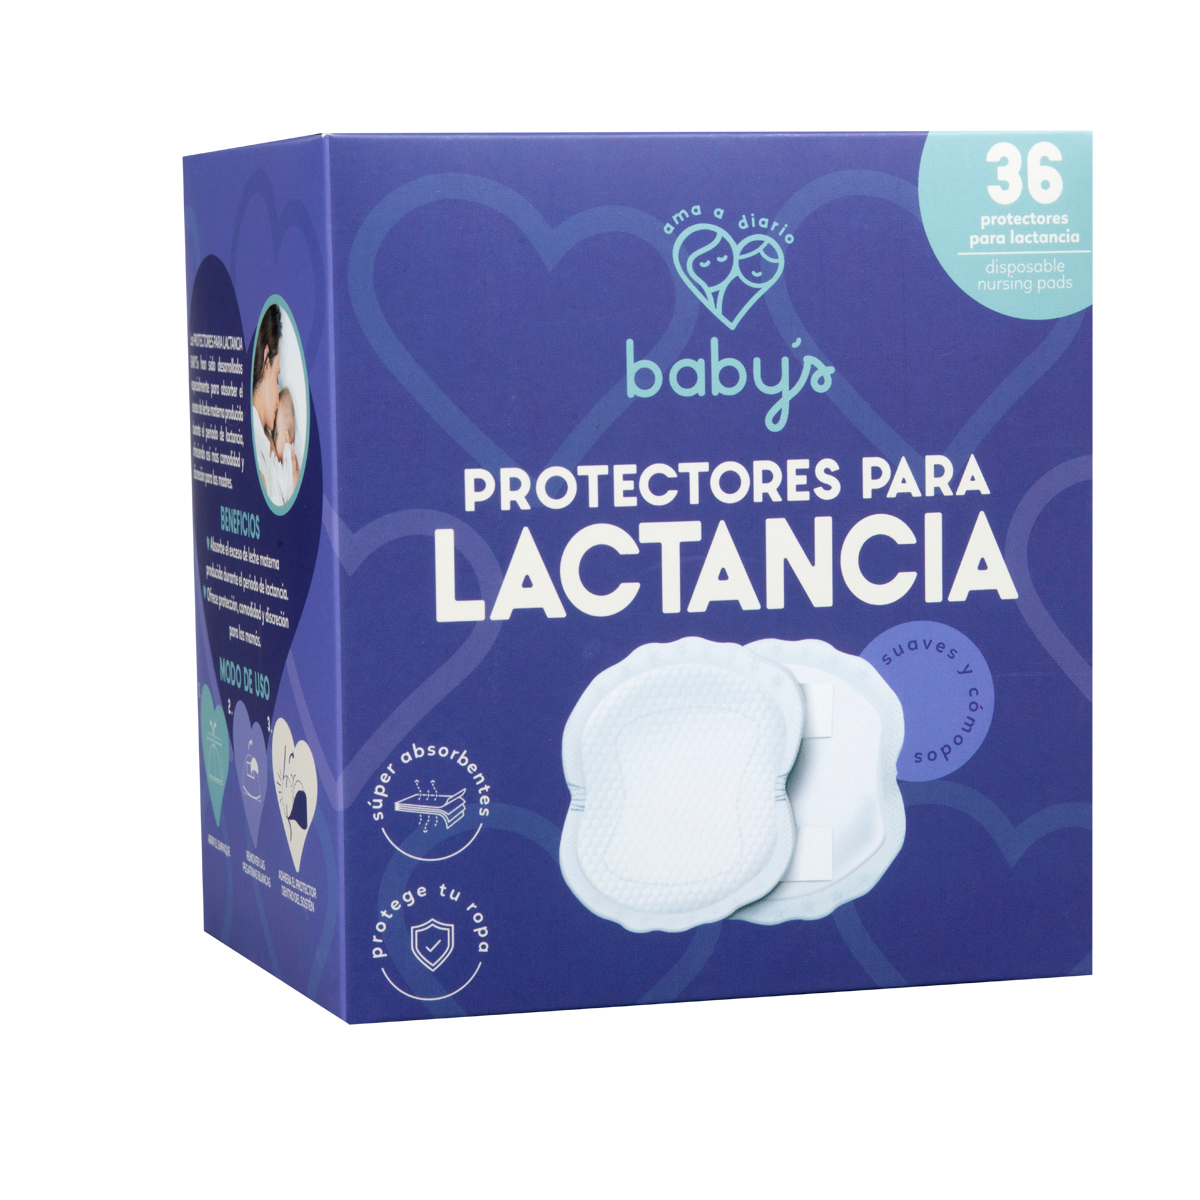 Protectores de Lactancia – Baby EcoHero